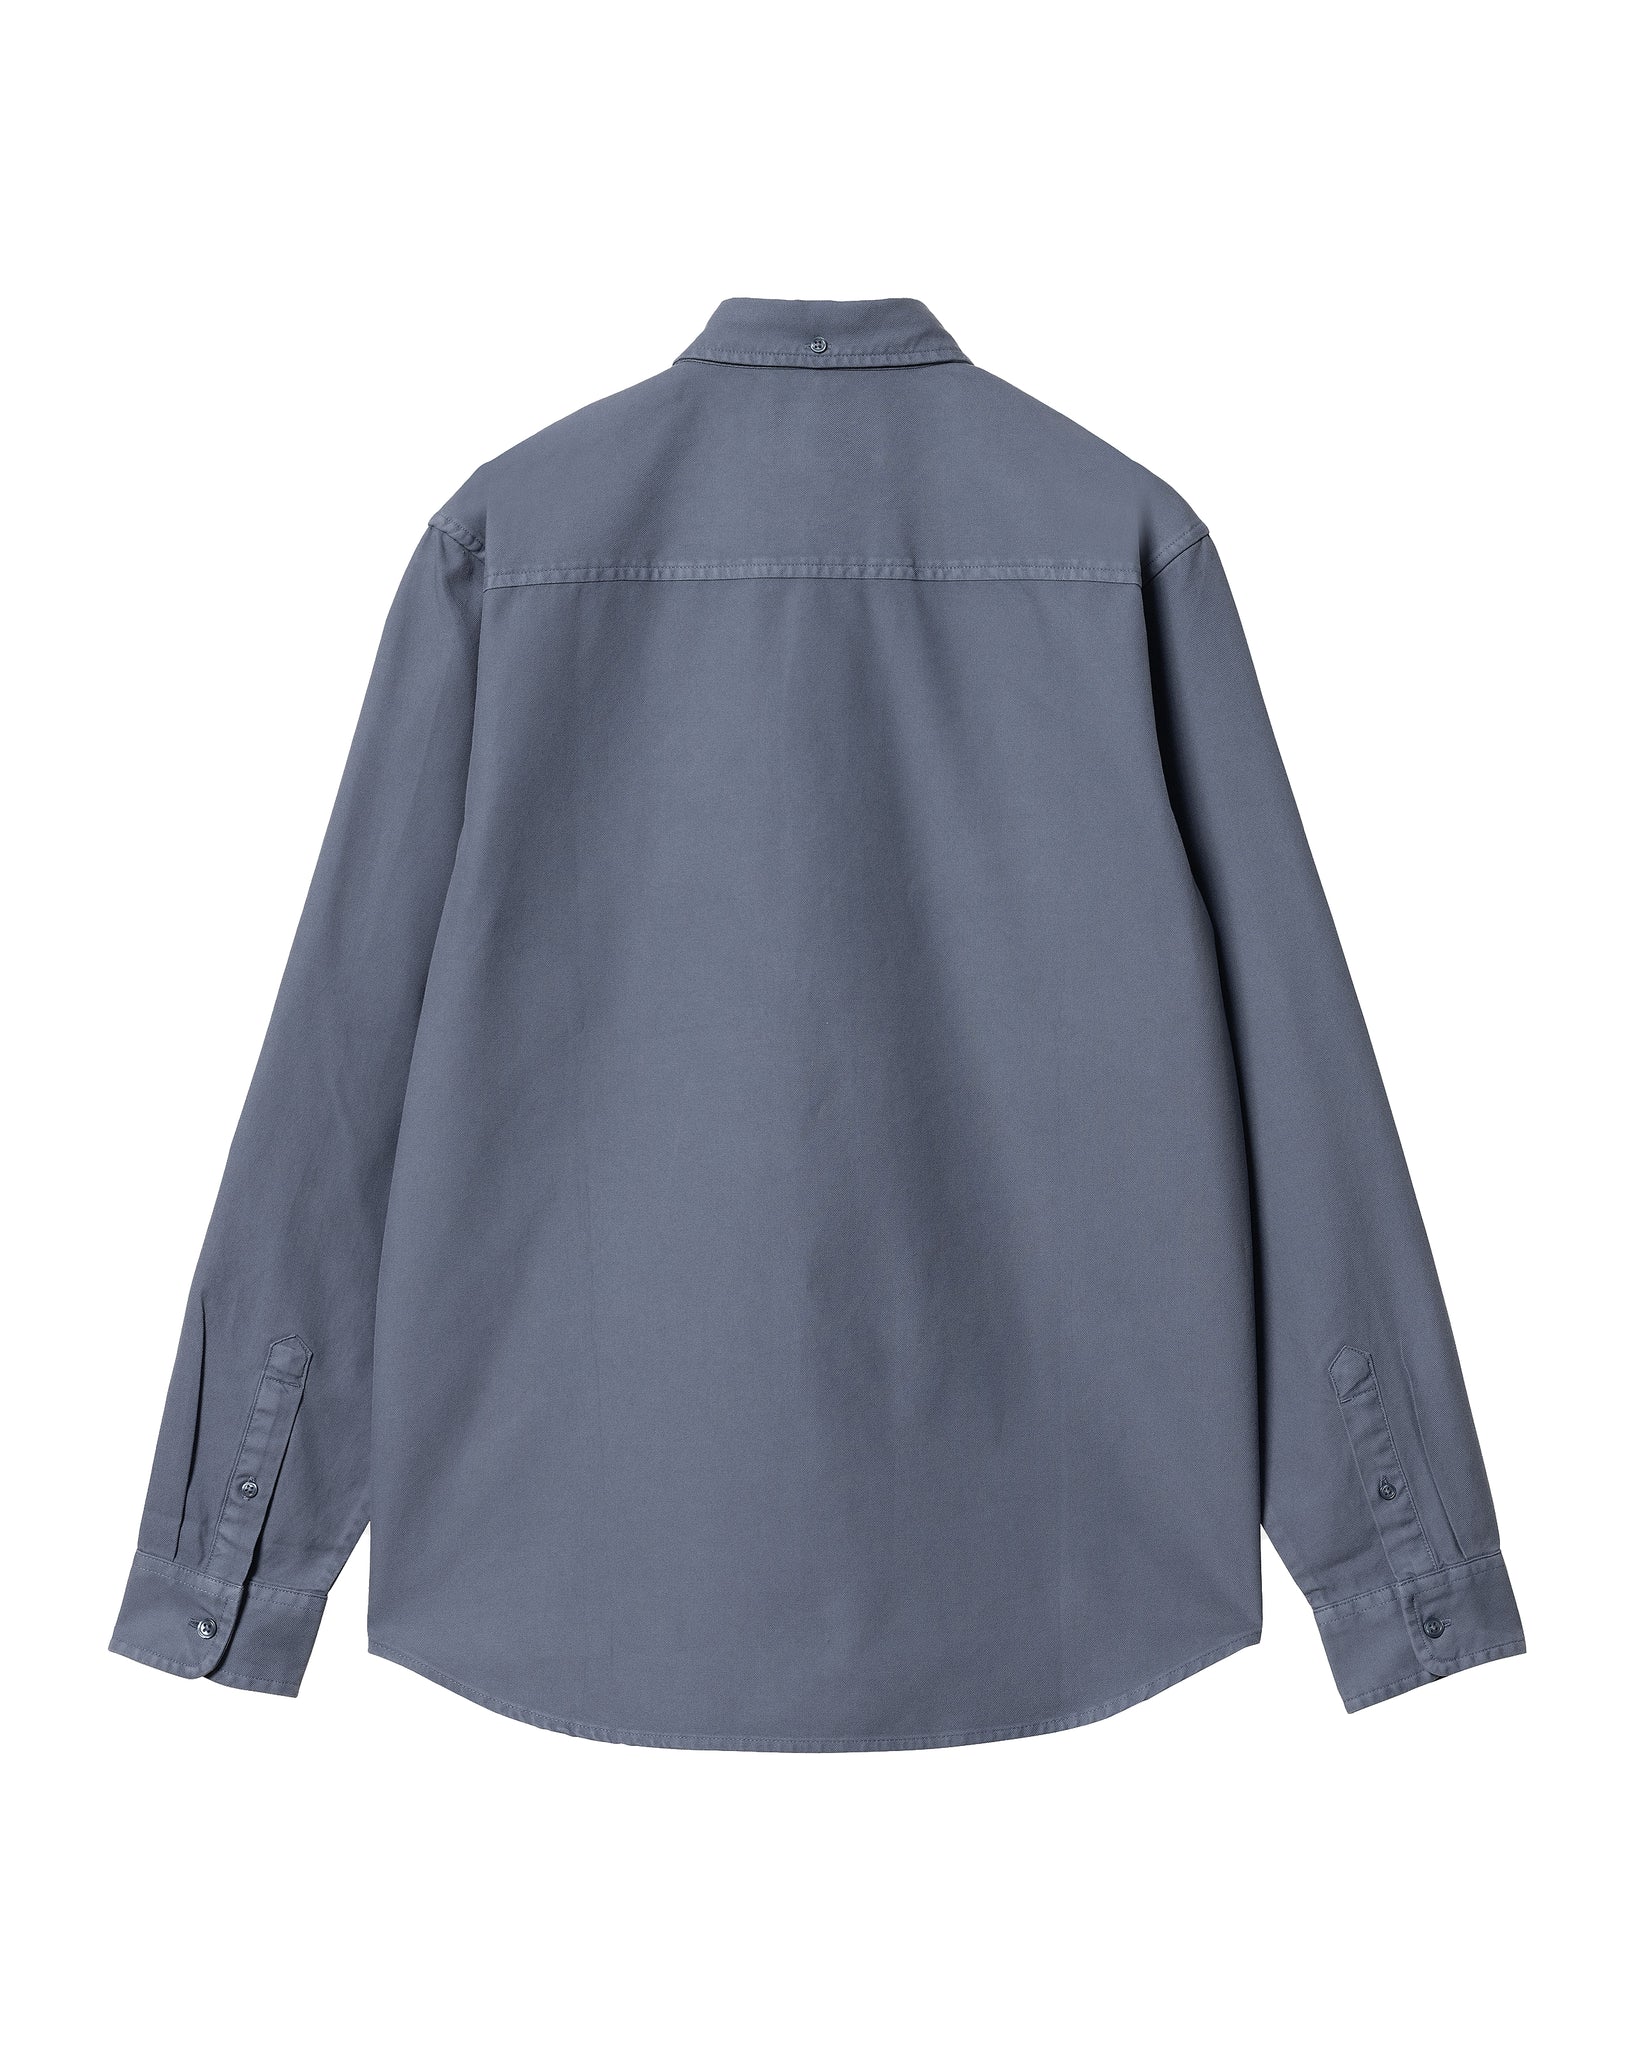 LS Bolton Shirt - Hudson Blue (garment dyed)